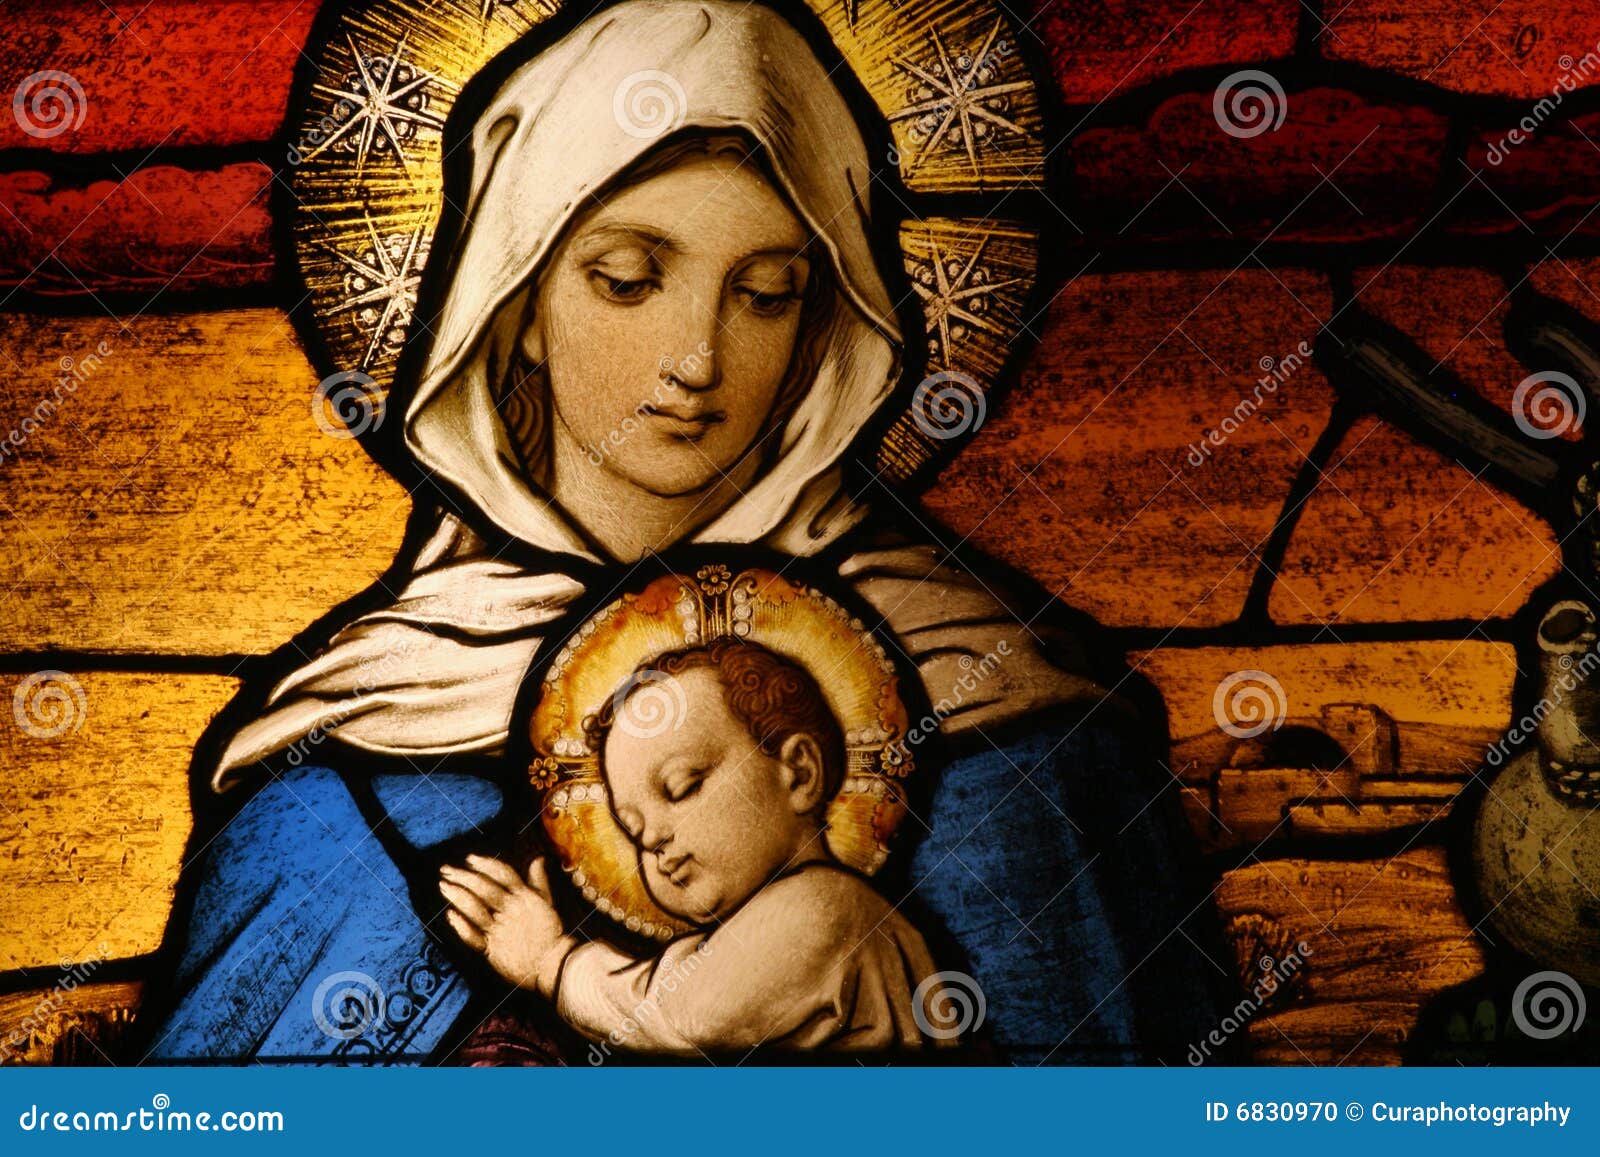 vigin mary with baby jesus